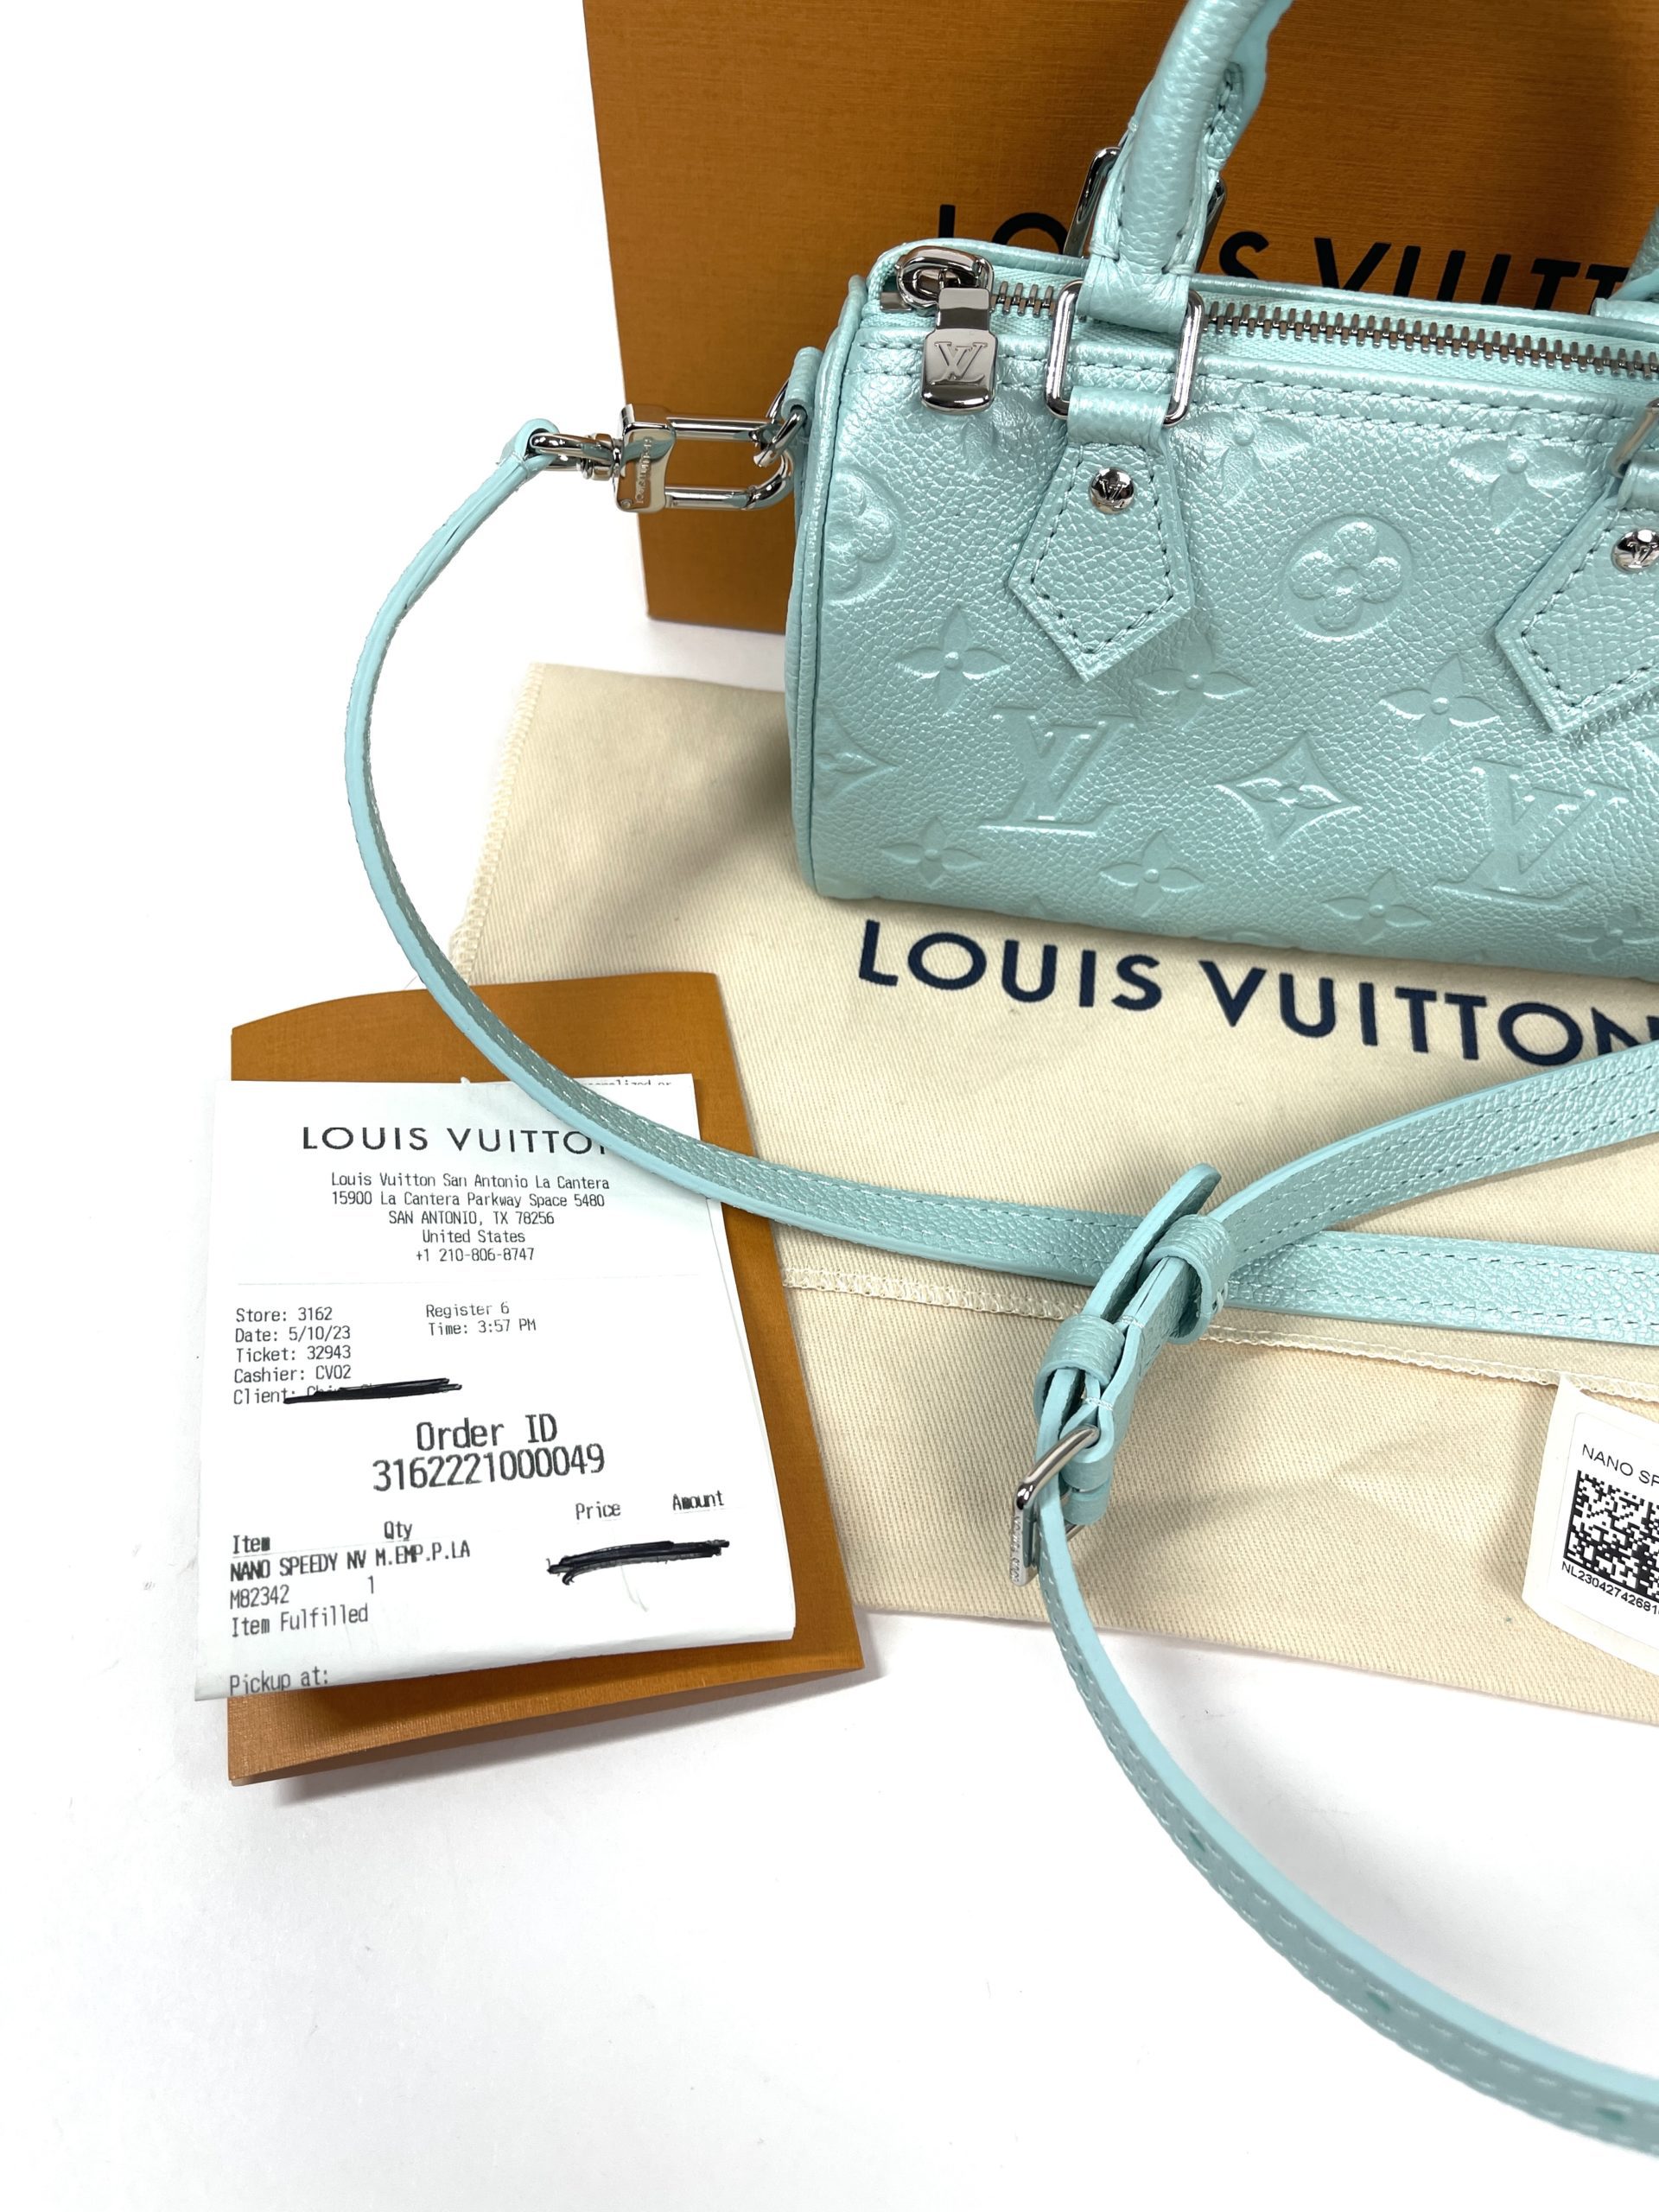 La Cantera Shops Louis Vuitton Address